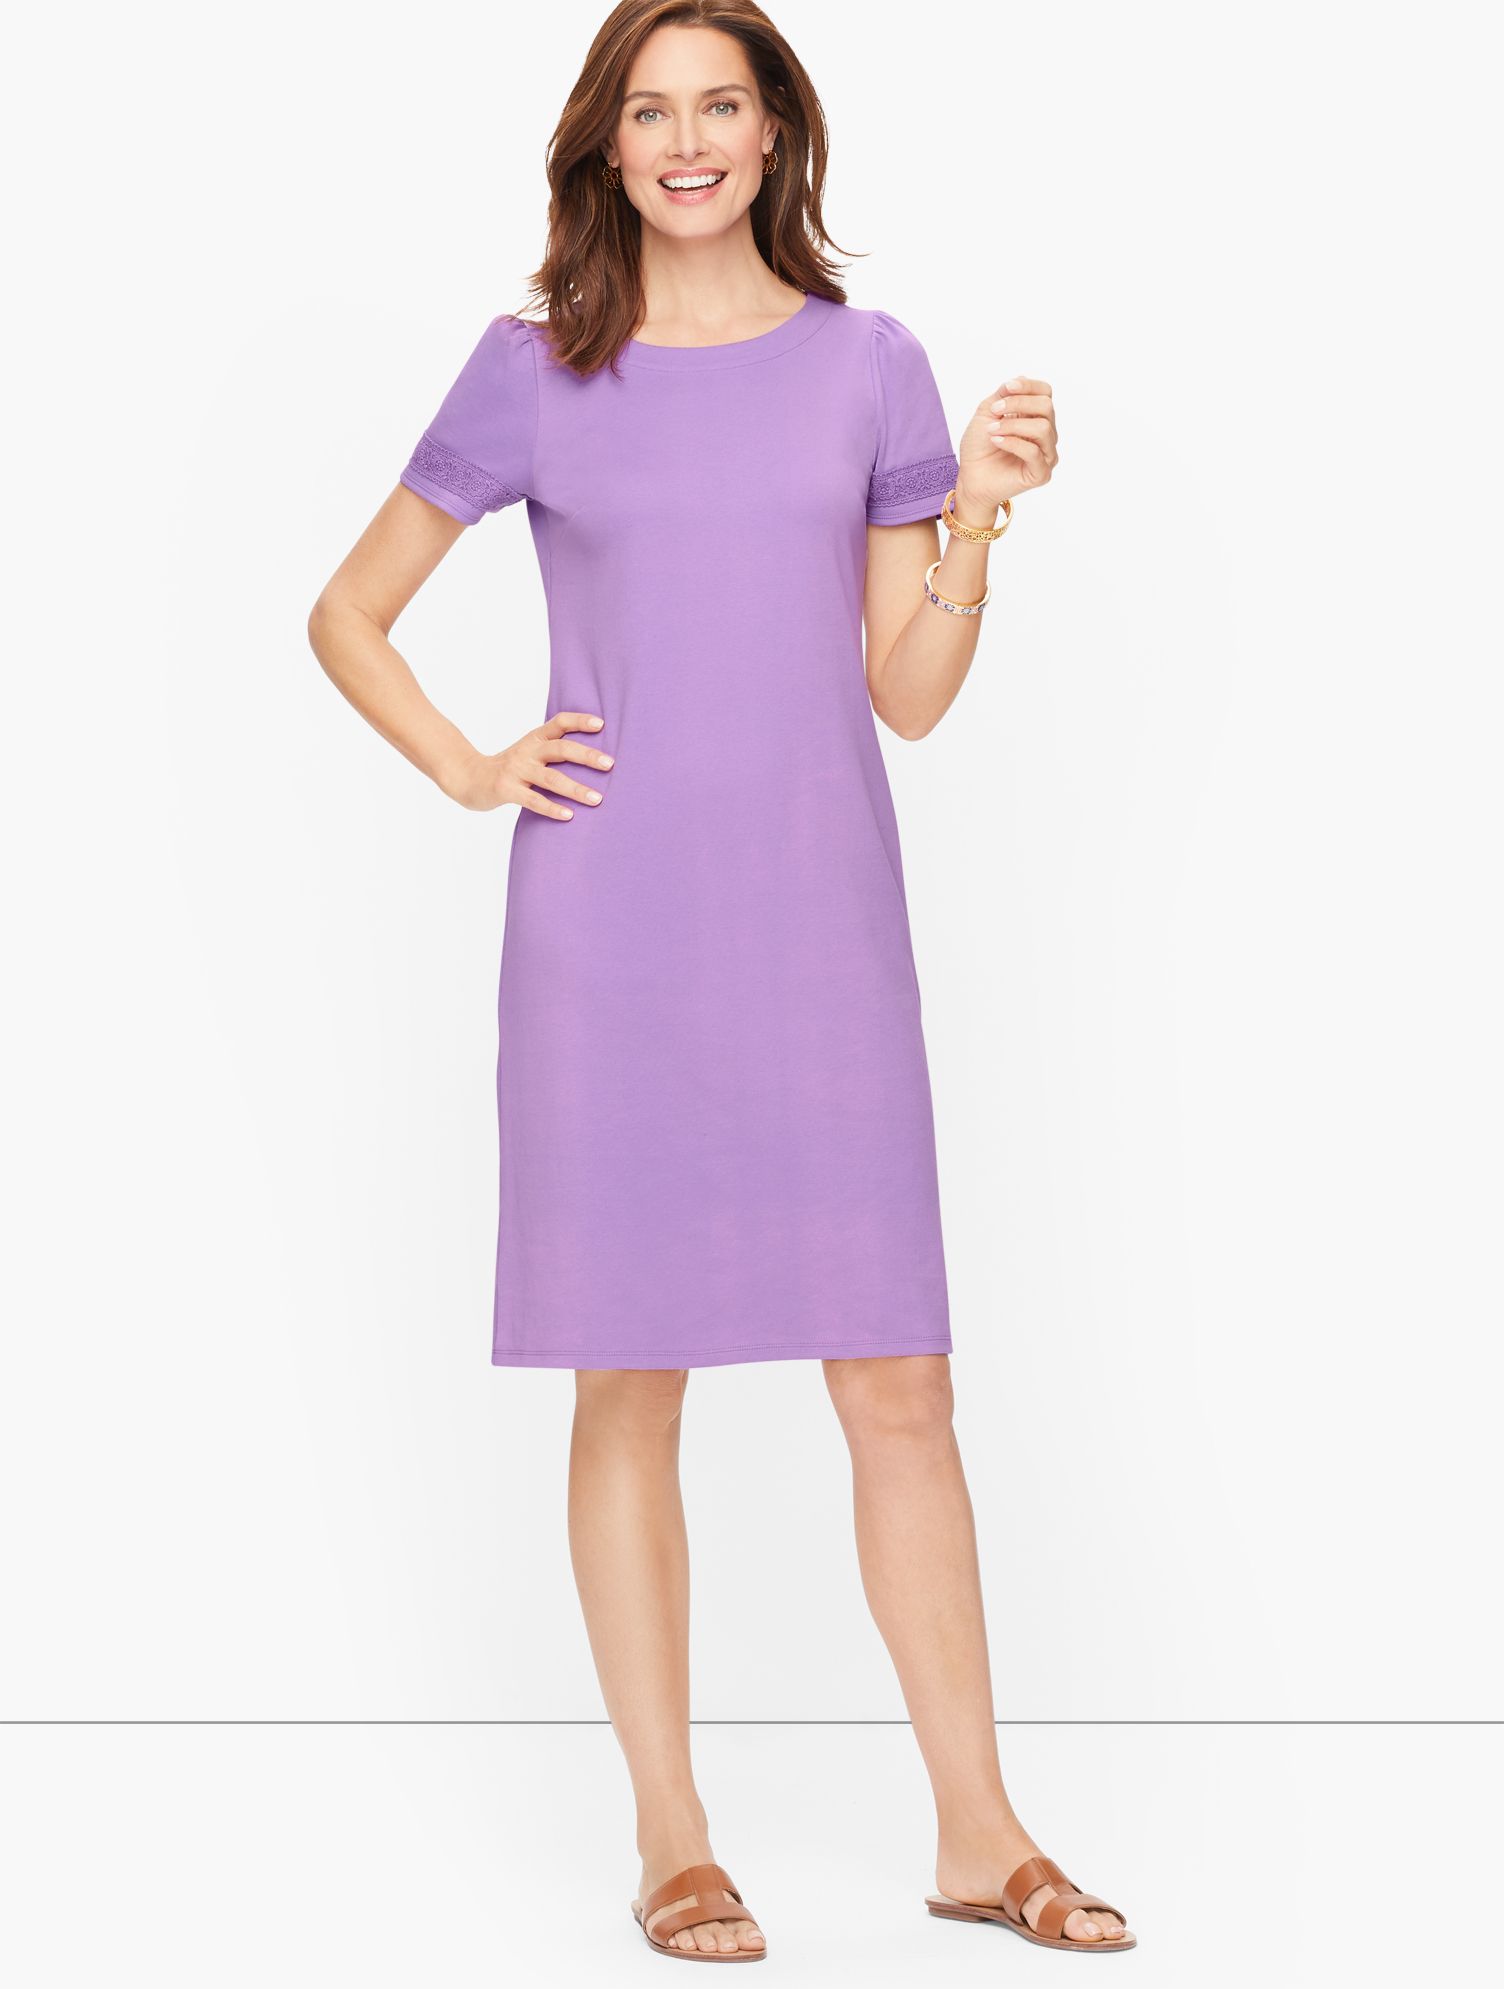 Cotton Lace Trim Shift Dress - Solid - Lavender - XS Talbots | Talbots